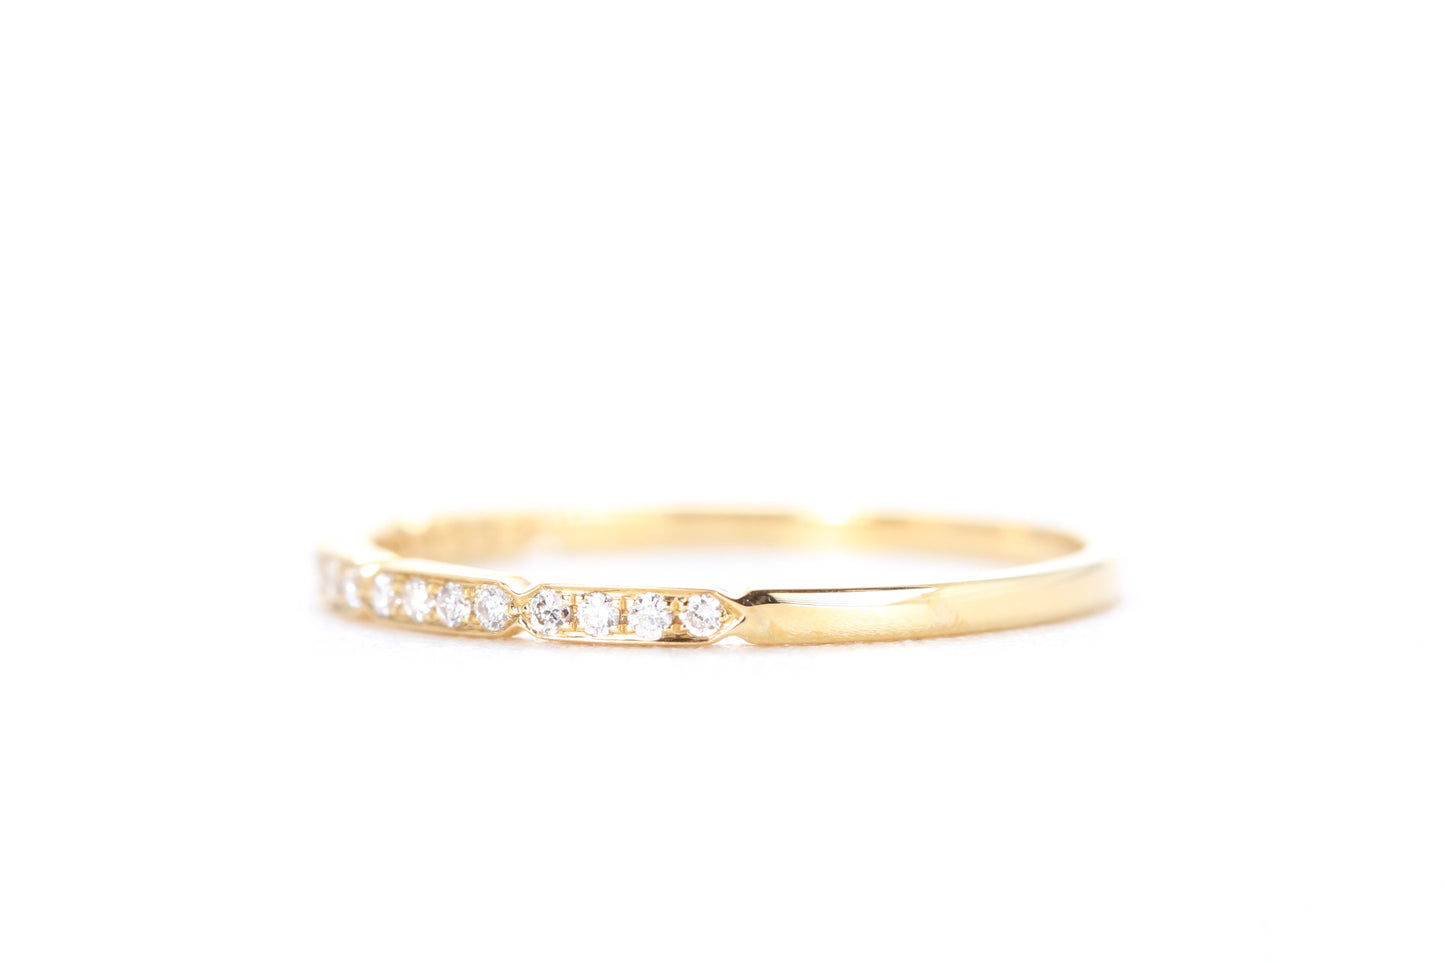 Segmented Diamond Ring